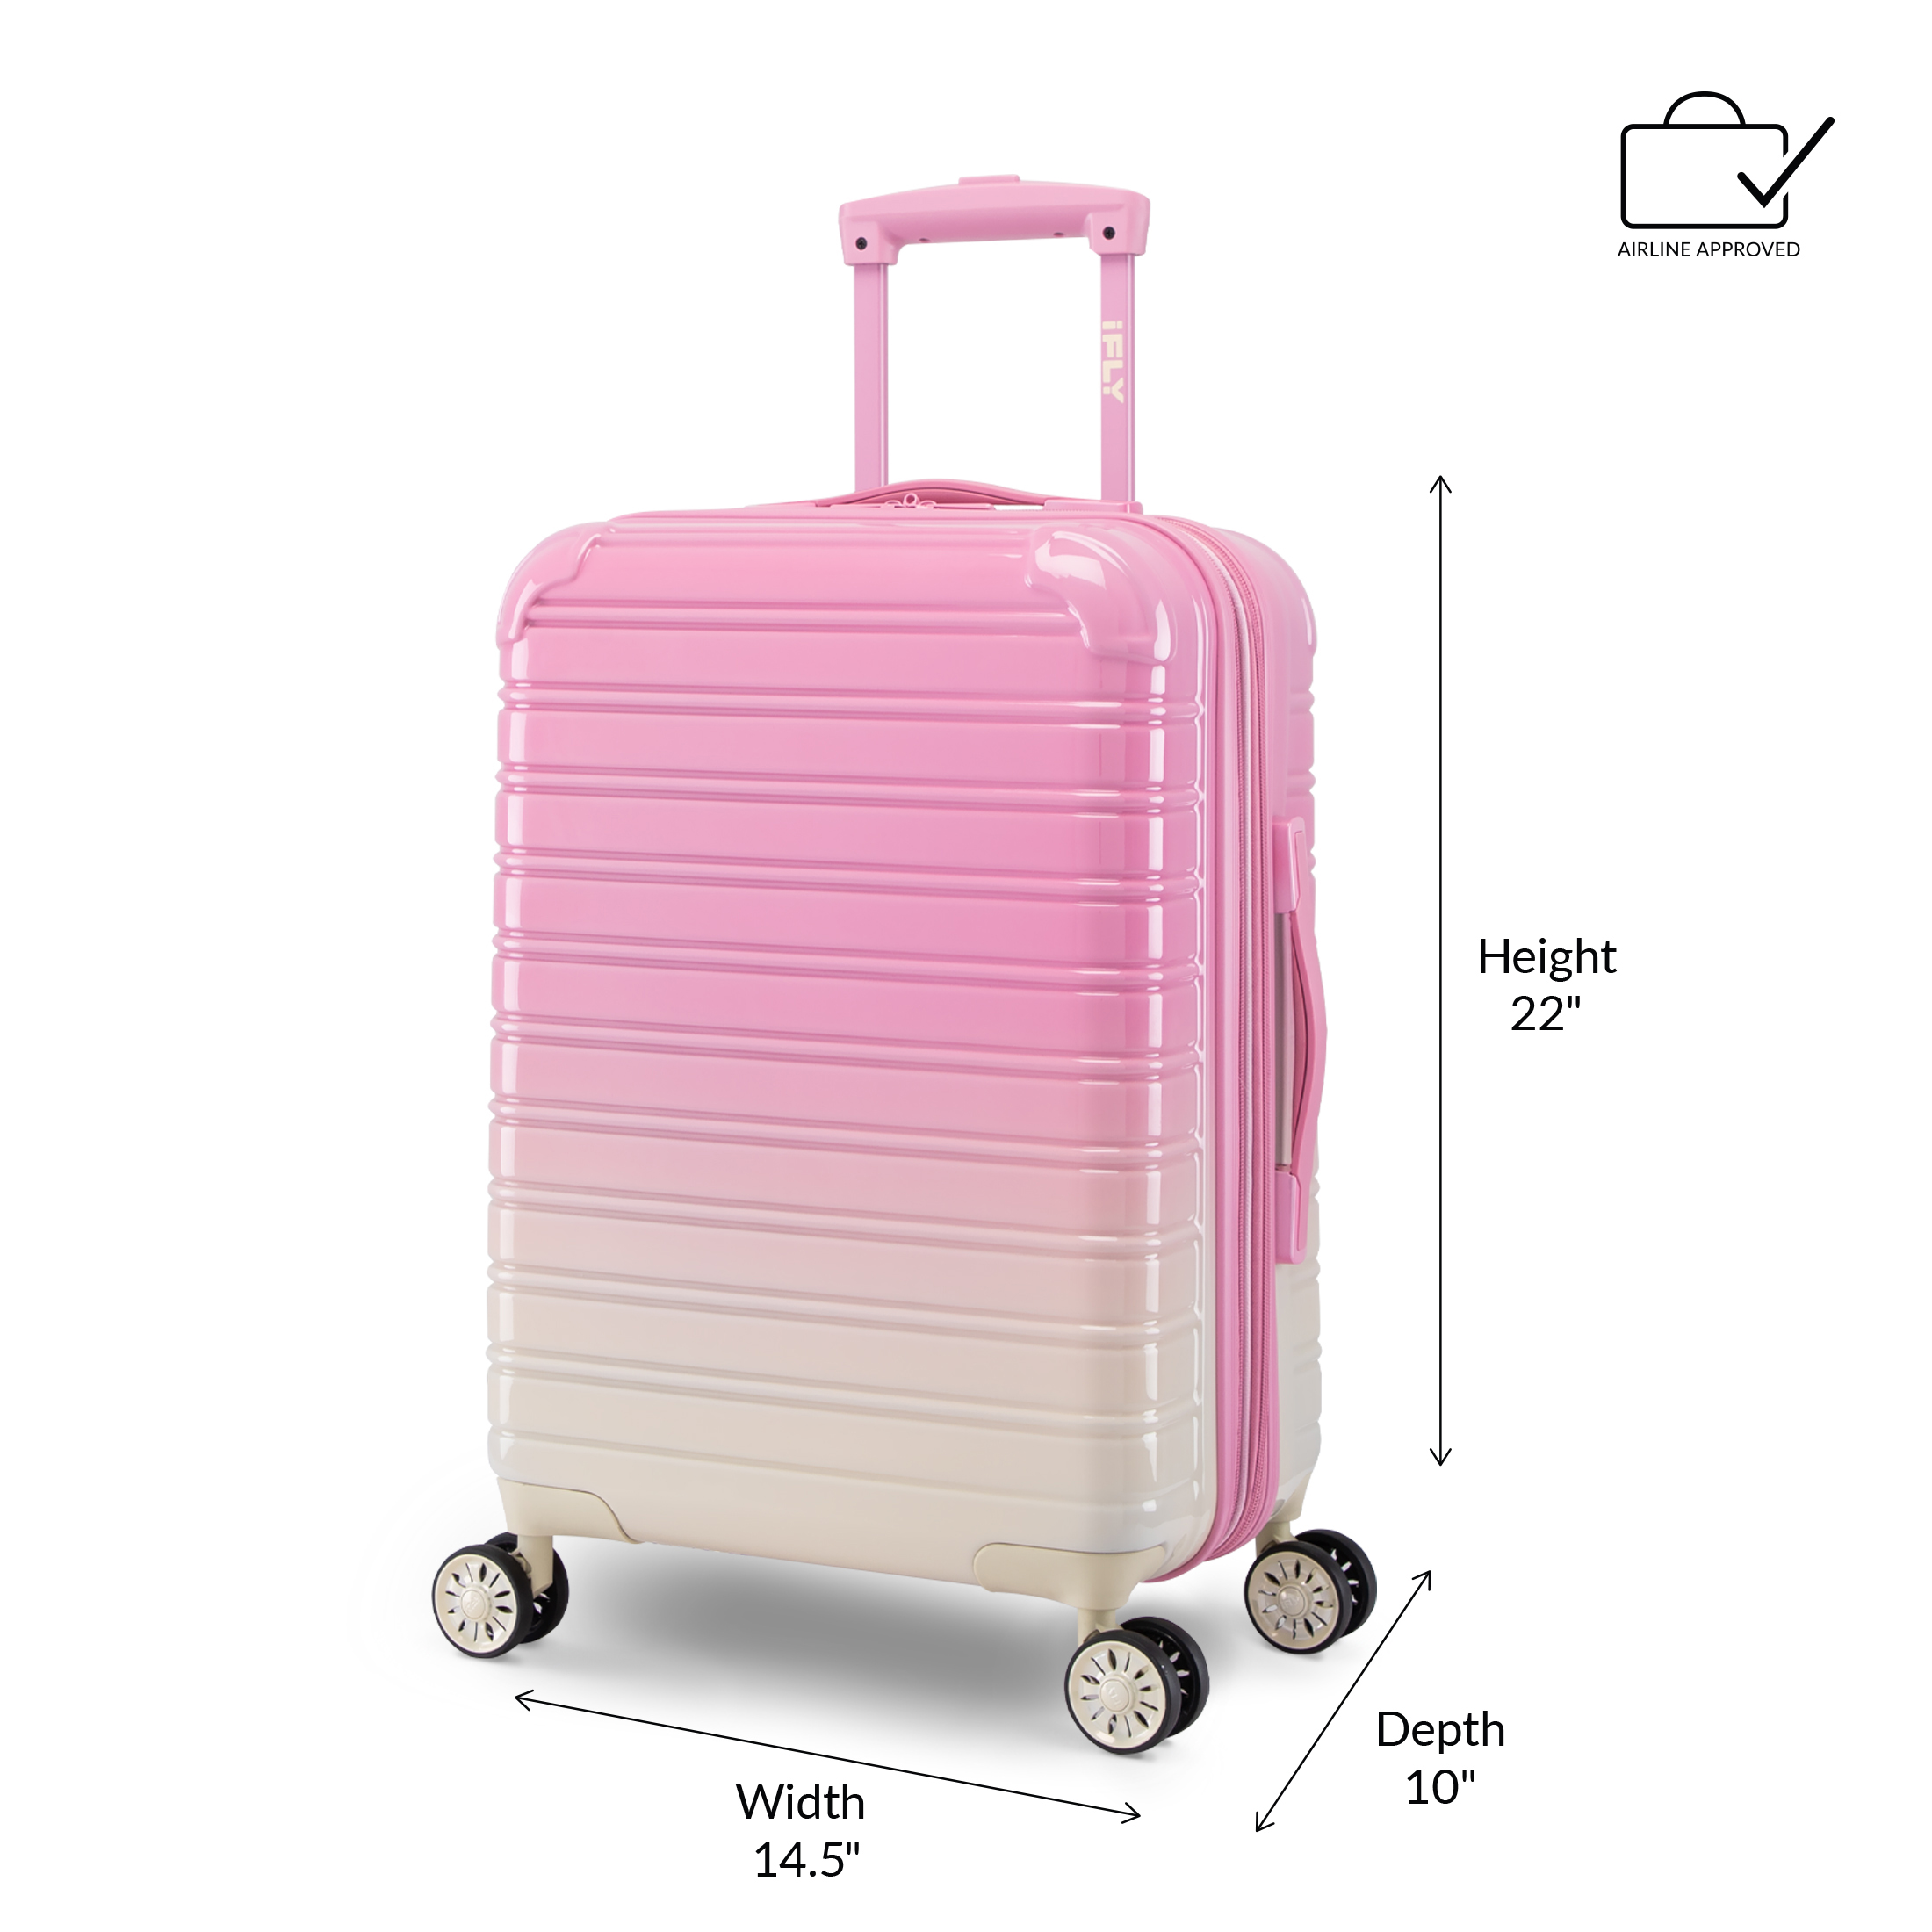 iFLY Hardside Fibertech Carry-on Luggage 20", Strawberry Lemonade - image 3 of 8